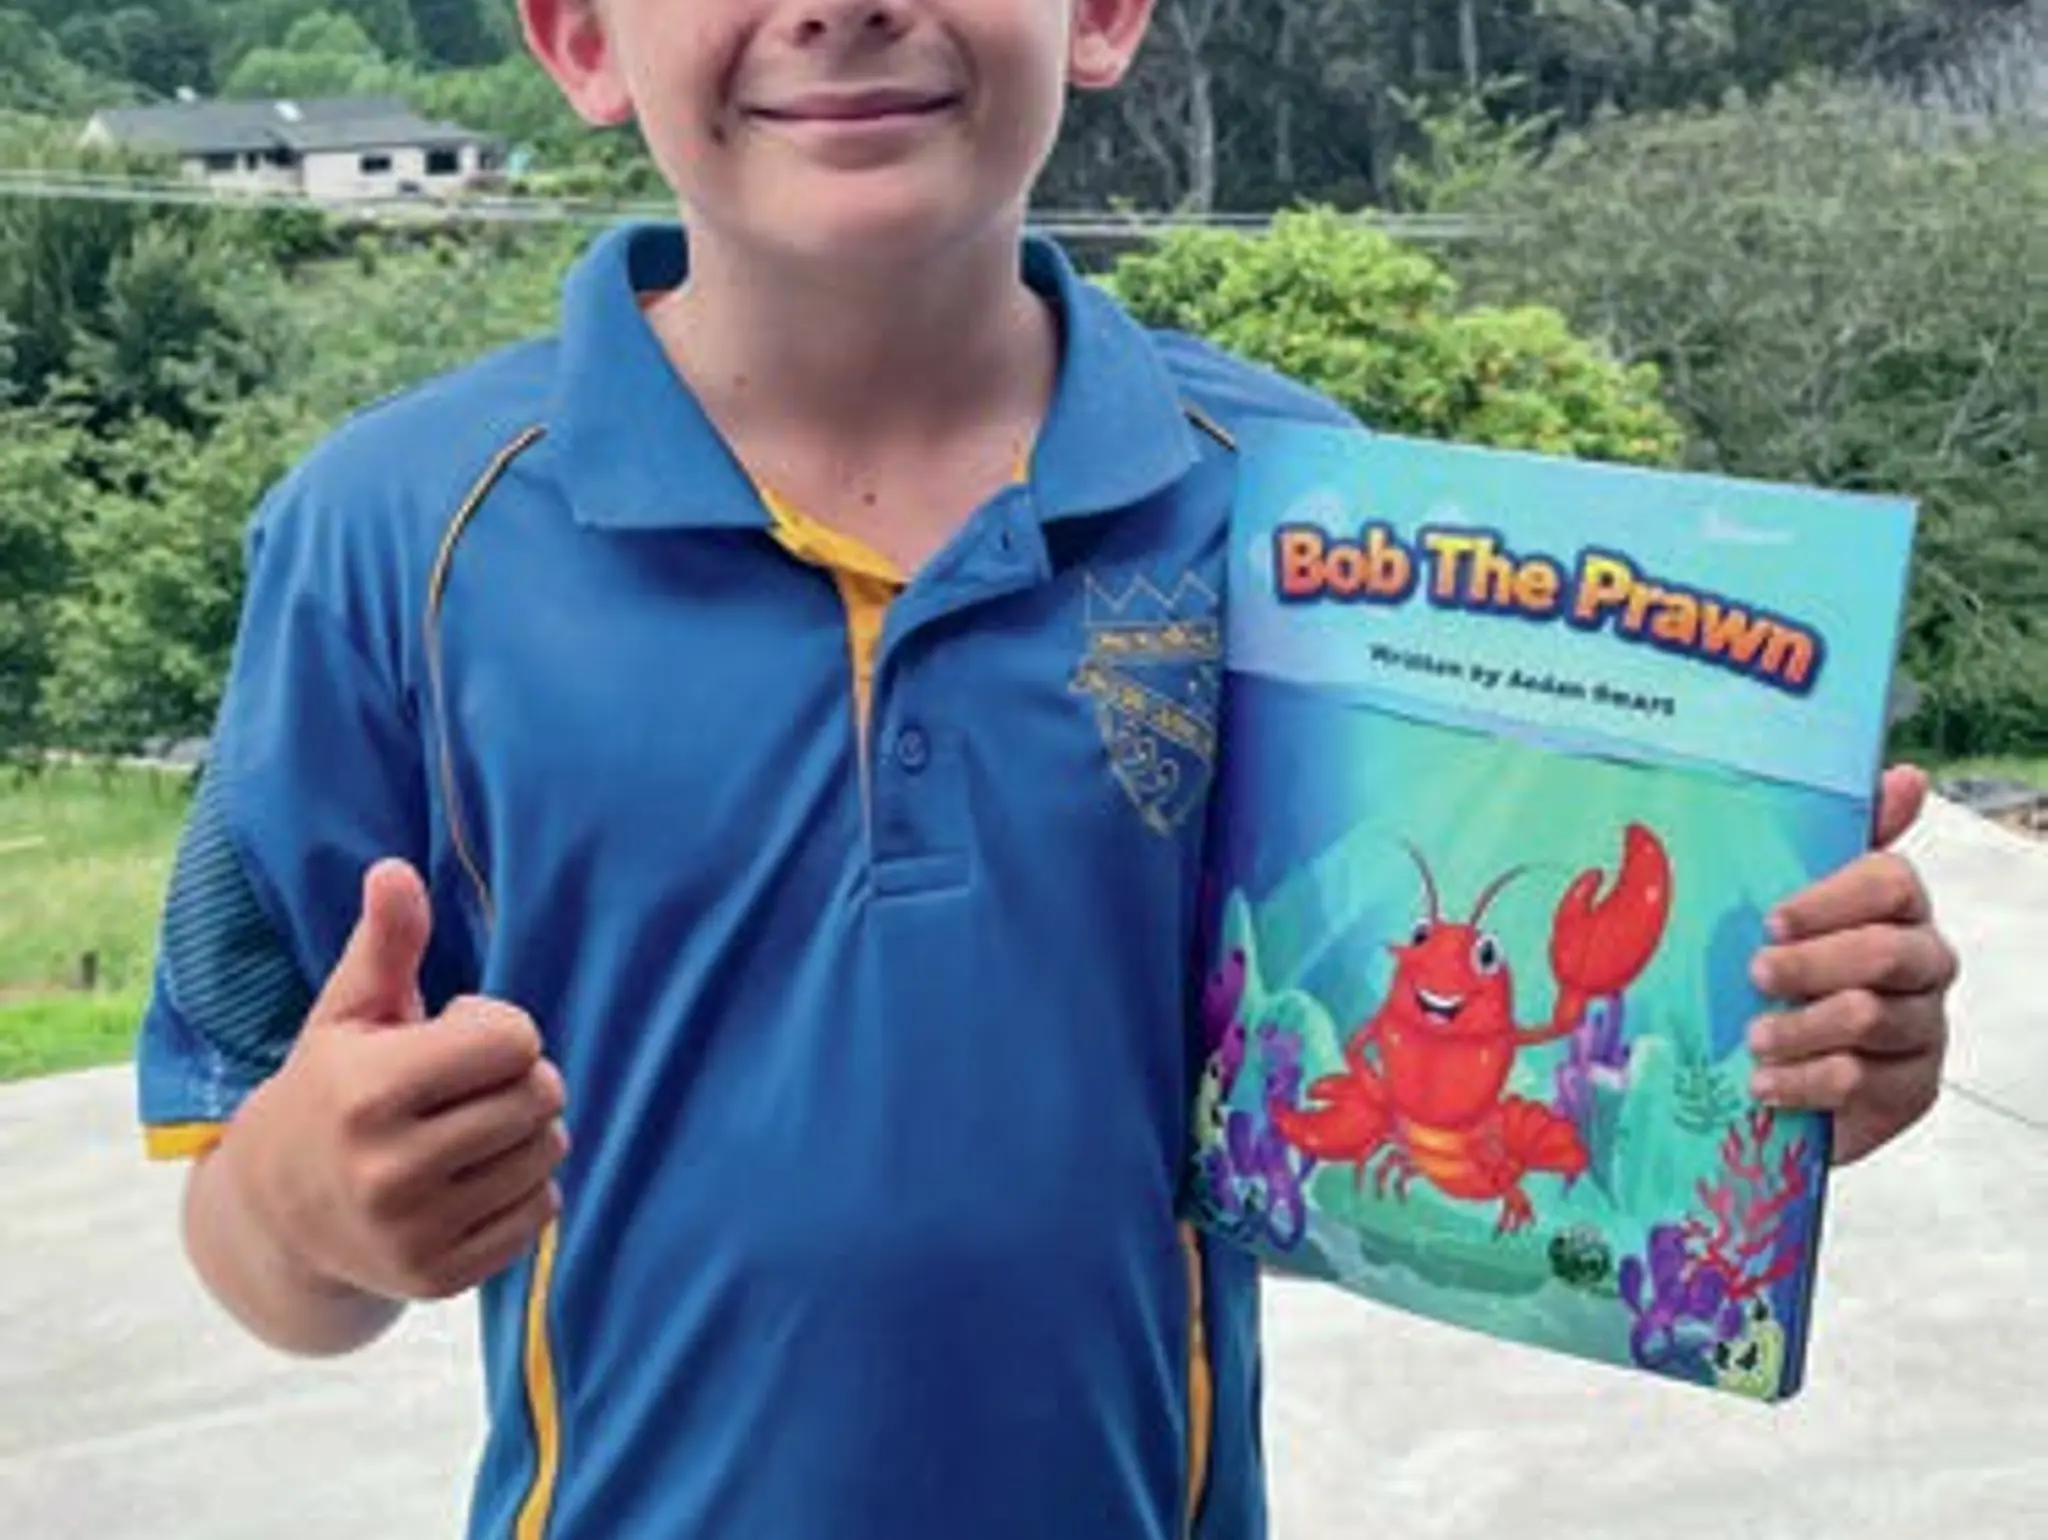 School Speech Converted To A Children’s Book